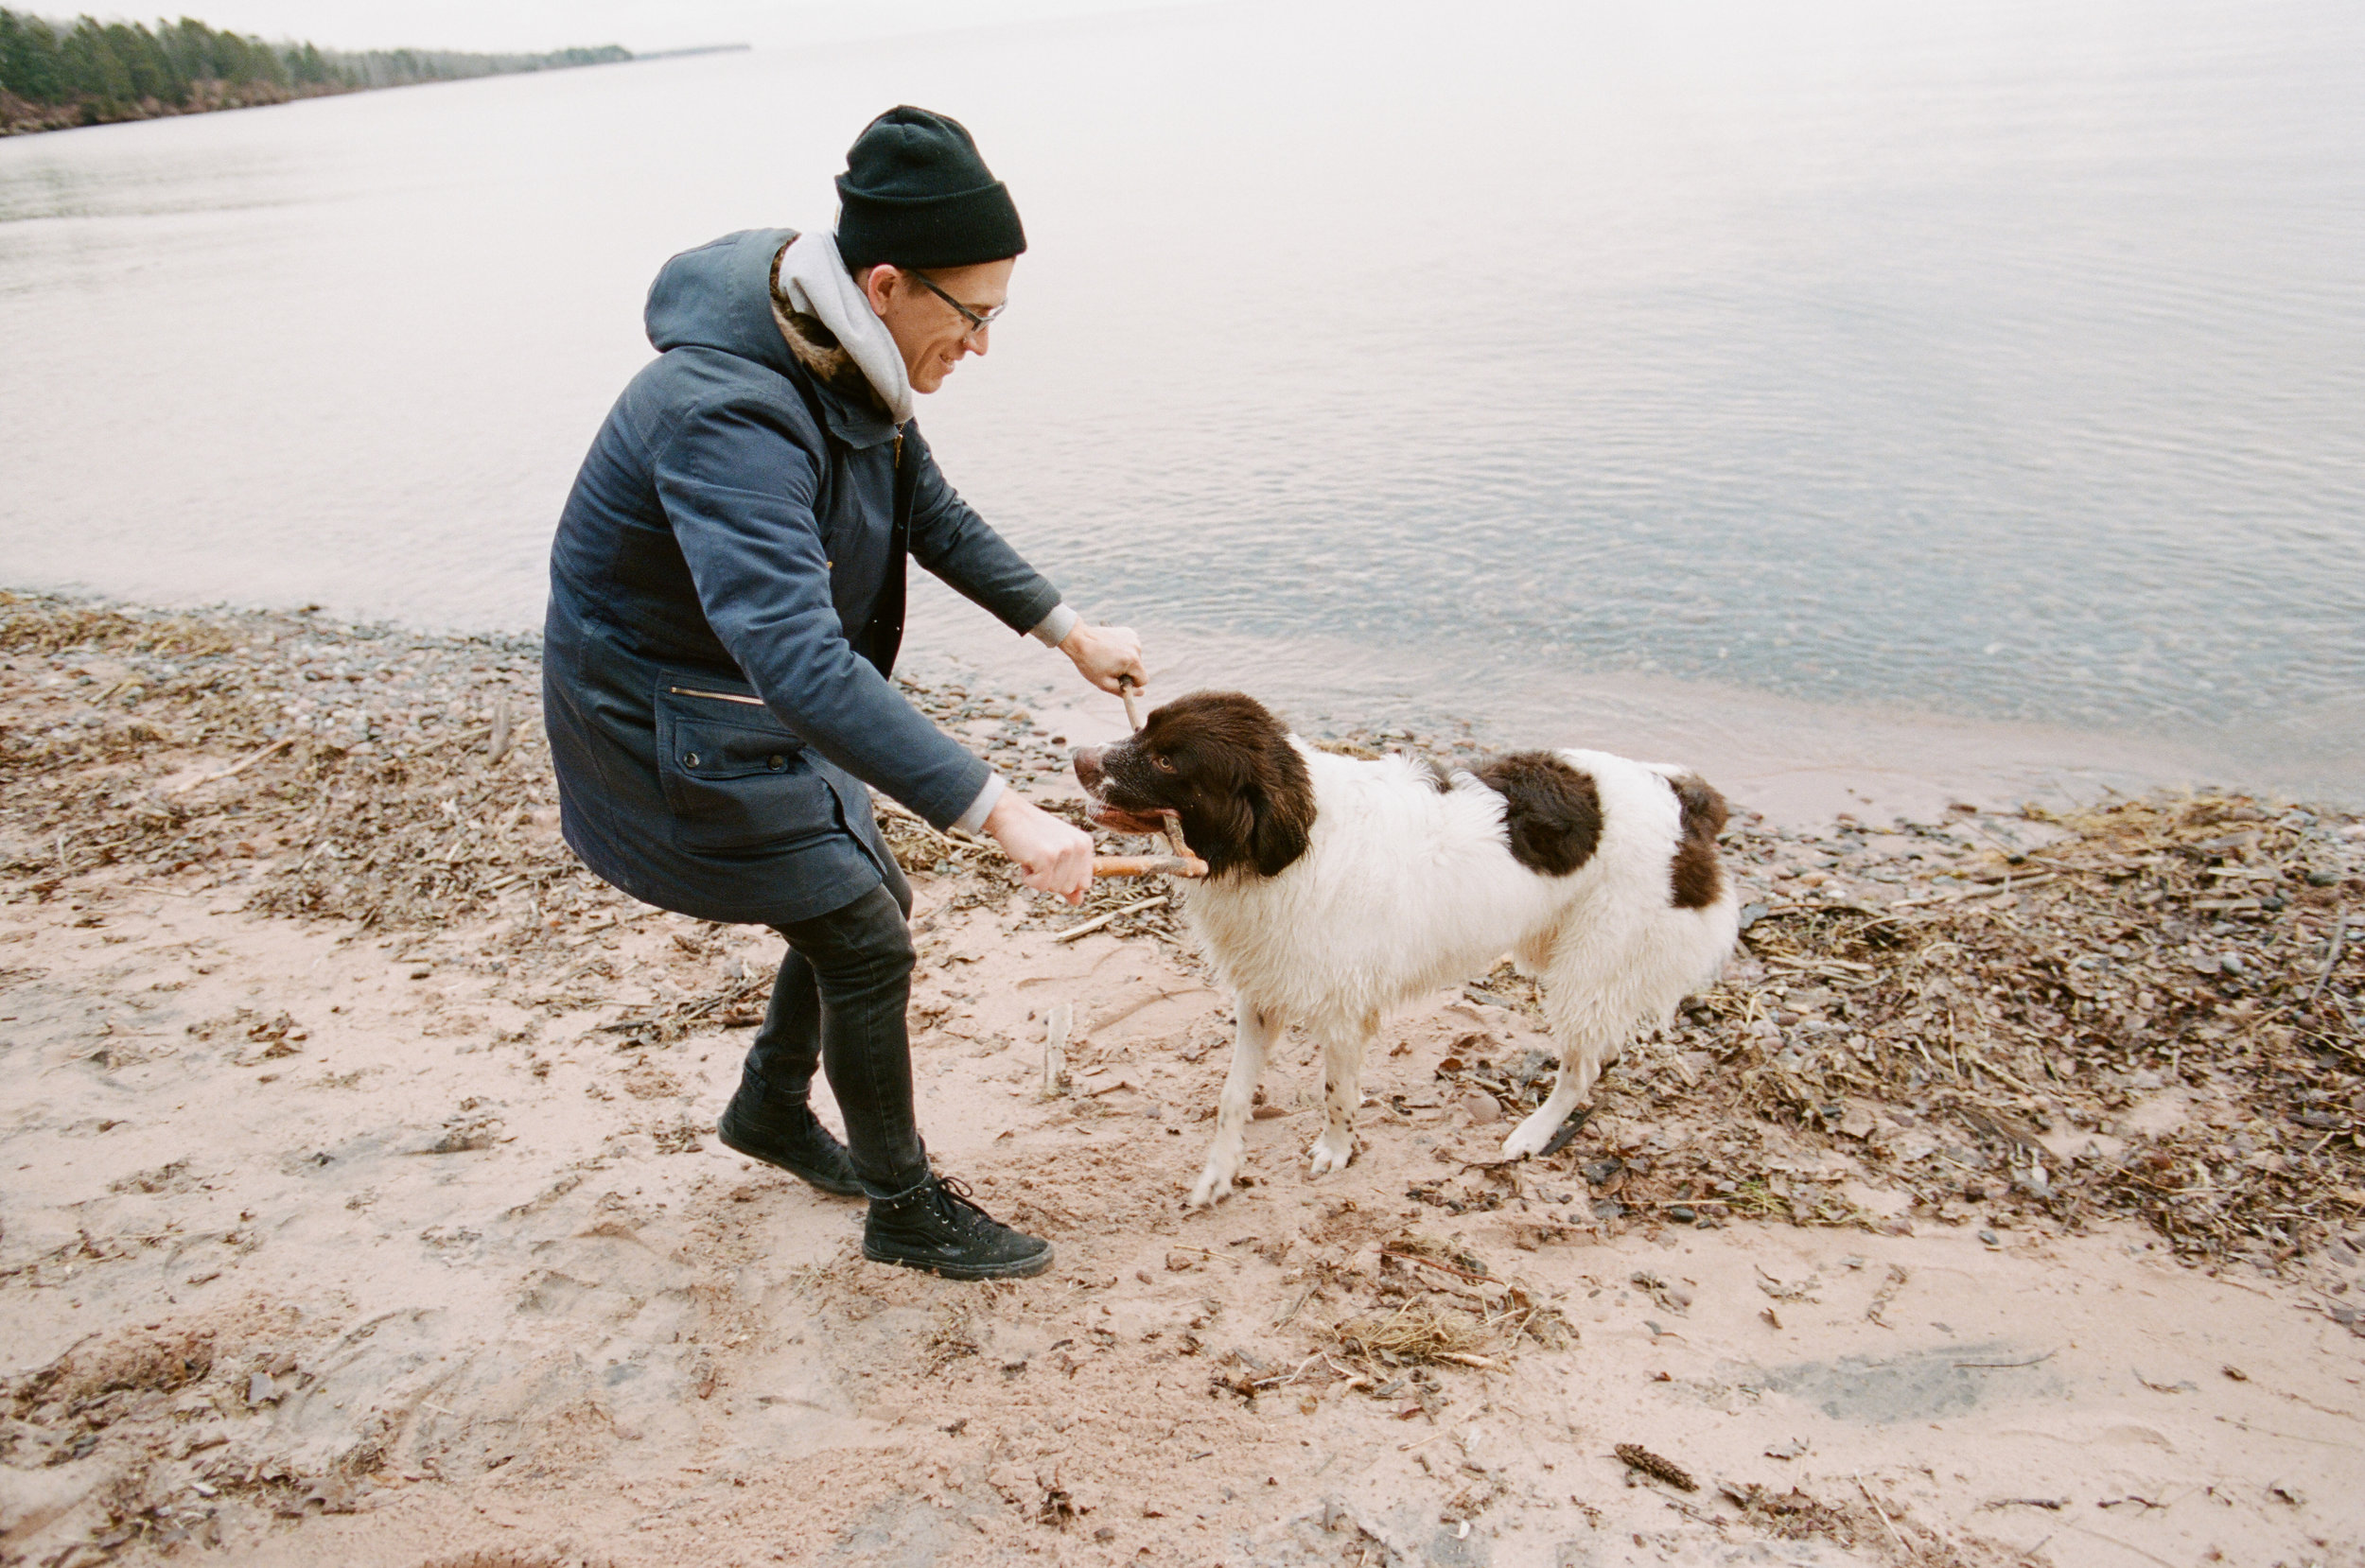 PNW-Based Commercial Family Adventure Tourism Photographer With Newfoundland Dog